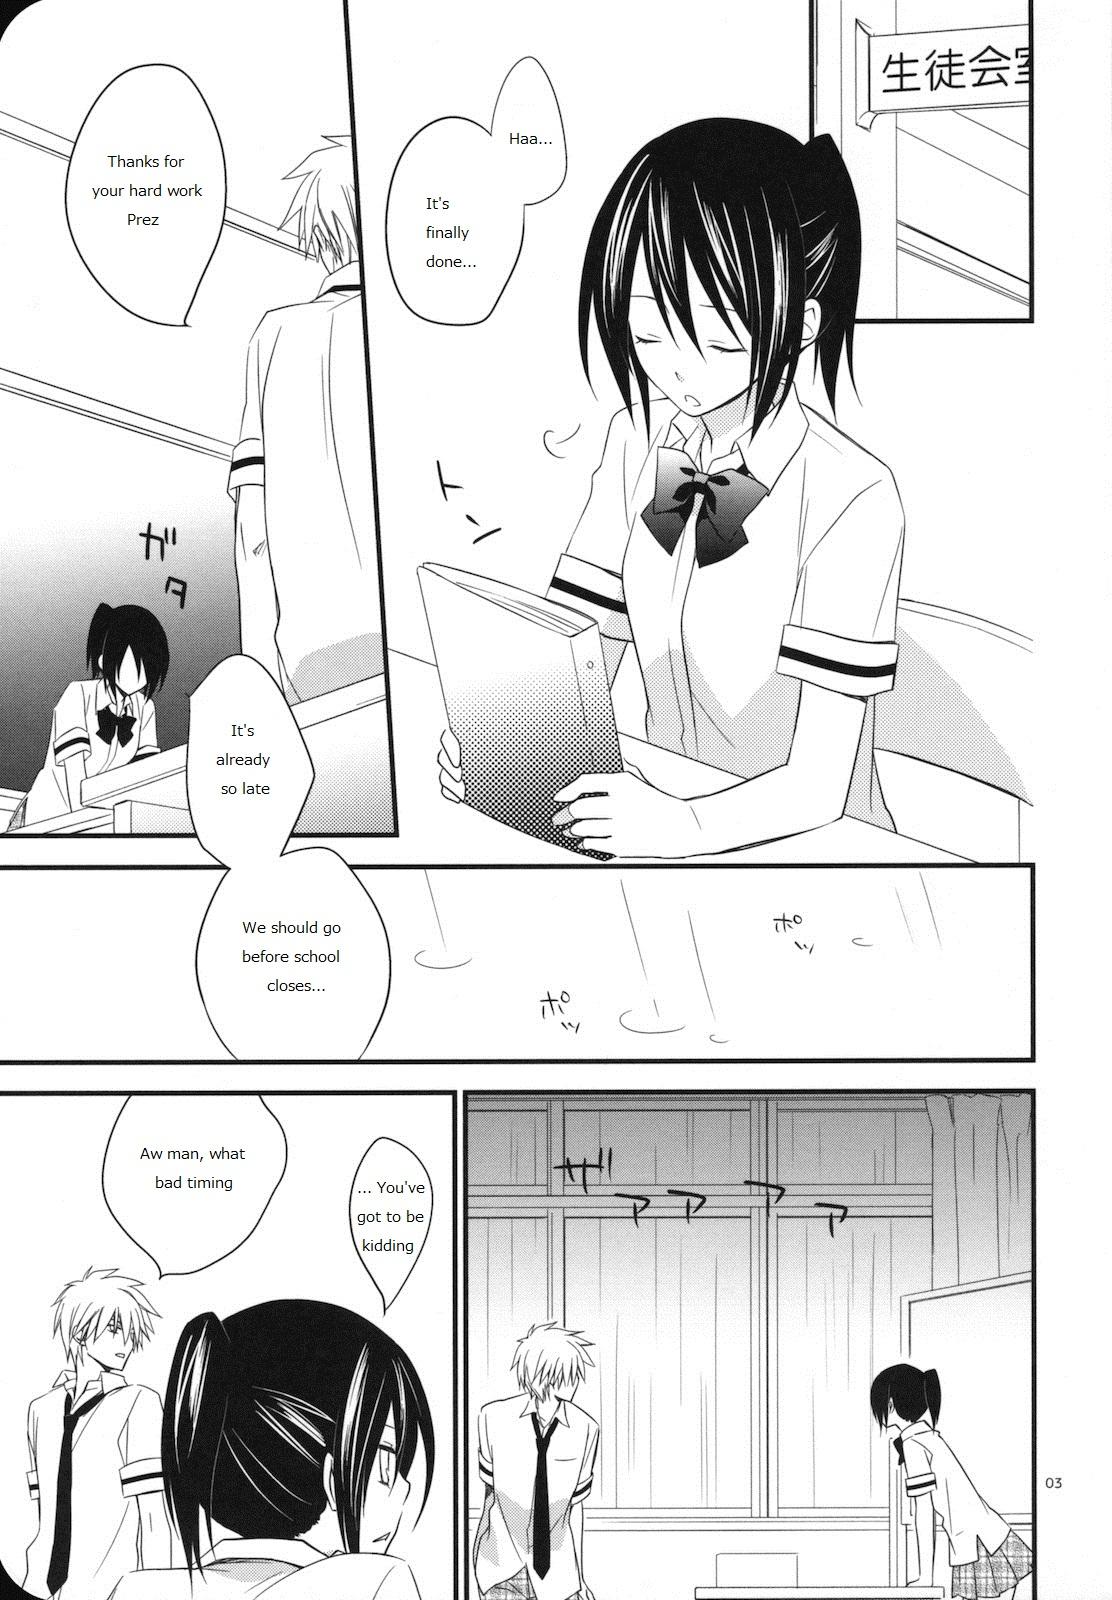 White Chick elle*2 - Kaichou wa maid sama Sub - Page 2